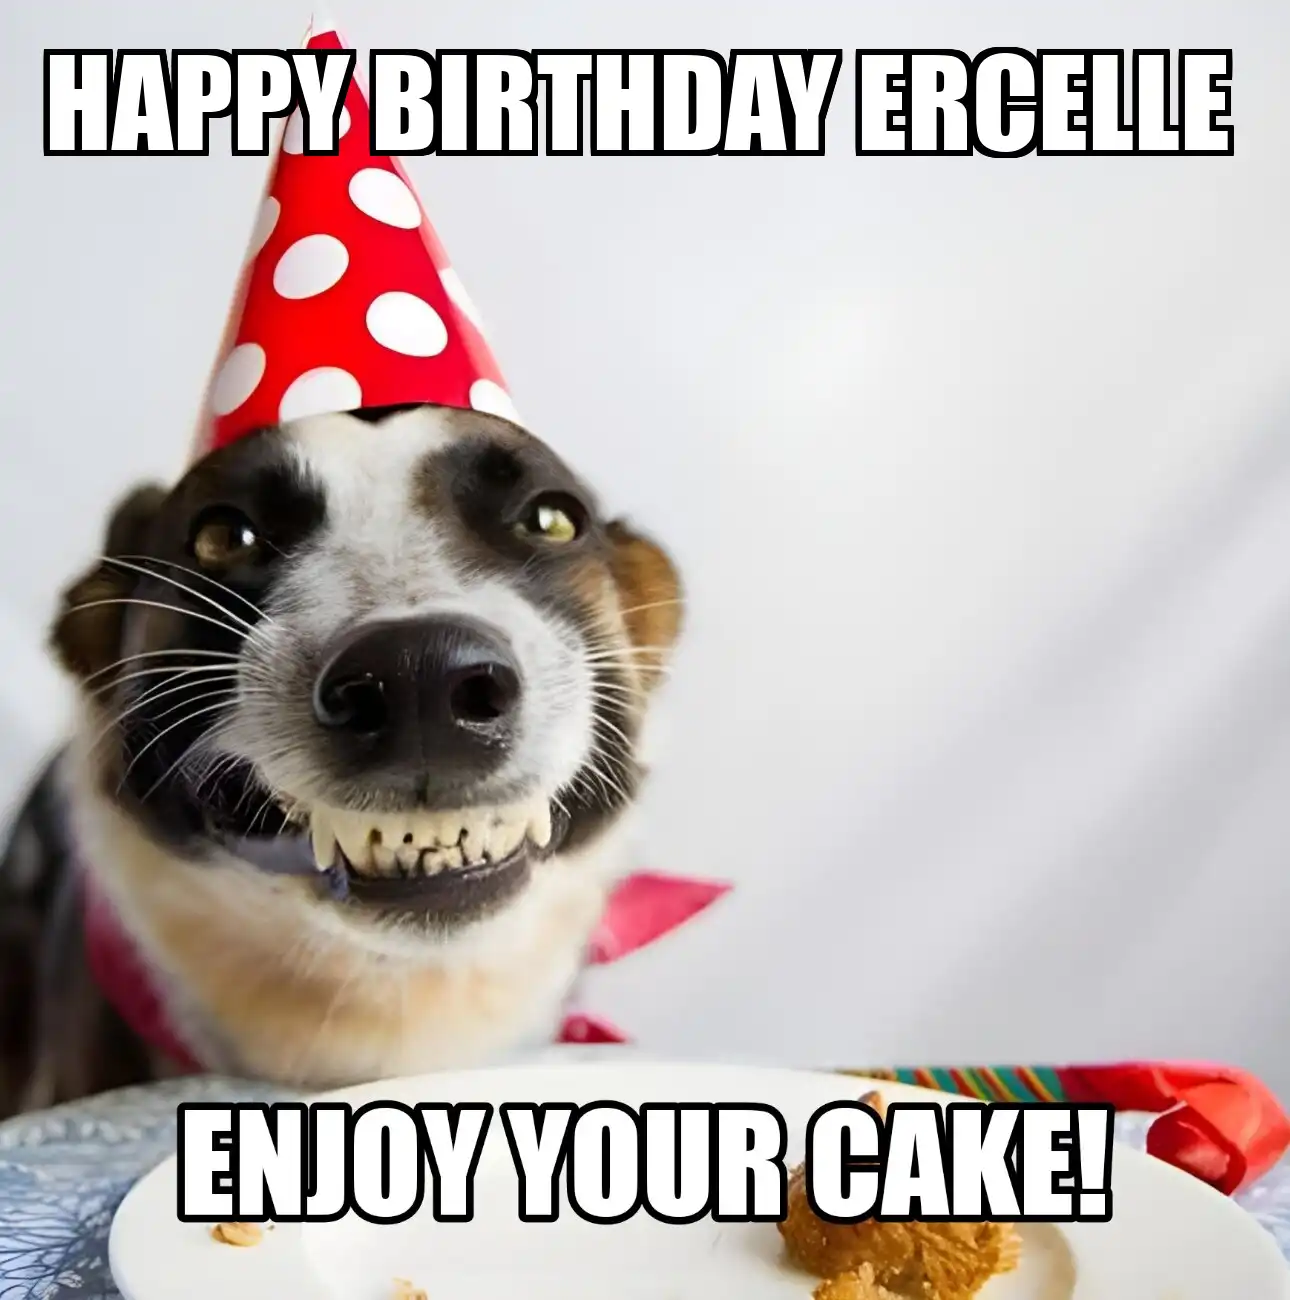 Happy Birthday Ercelle Enjoy Your Cake Dog Meme